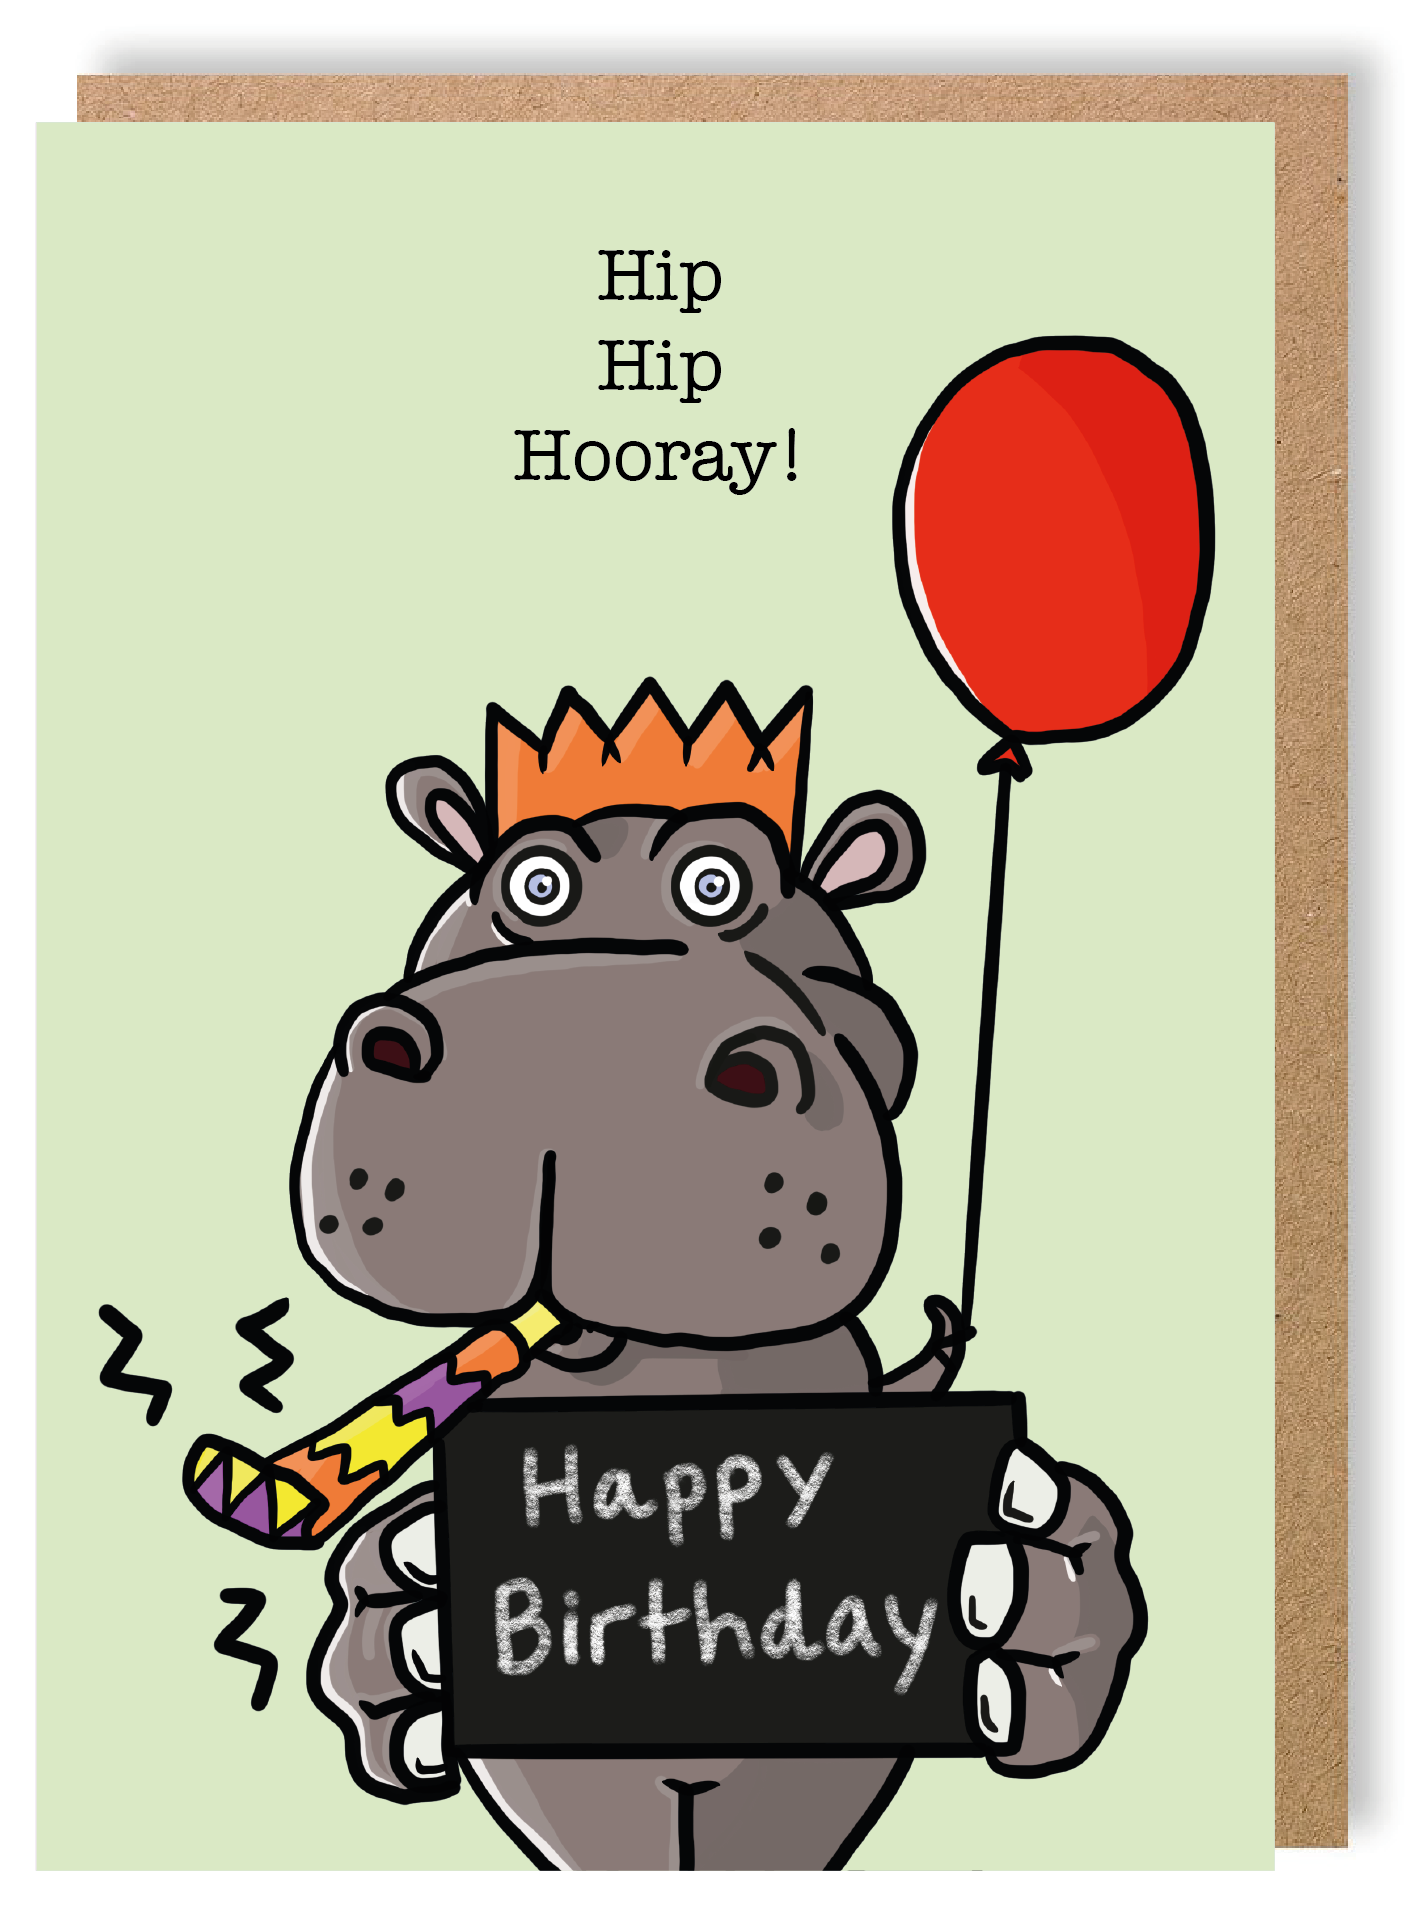 Happy Birthday - Hippo - Greetings Card - LukeHorton Art